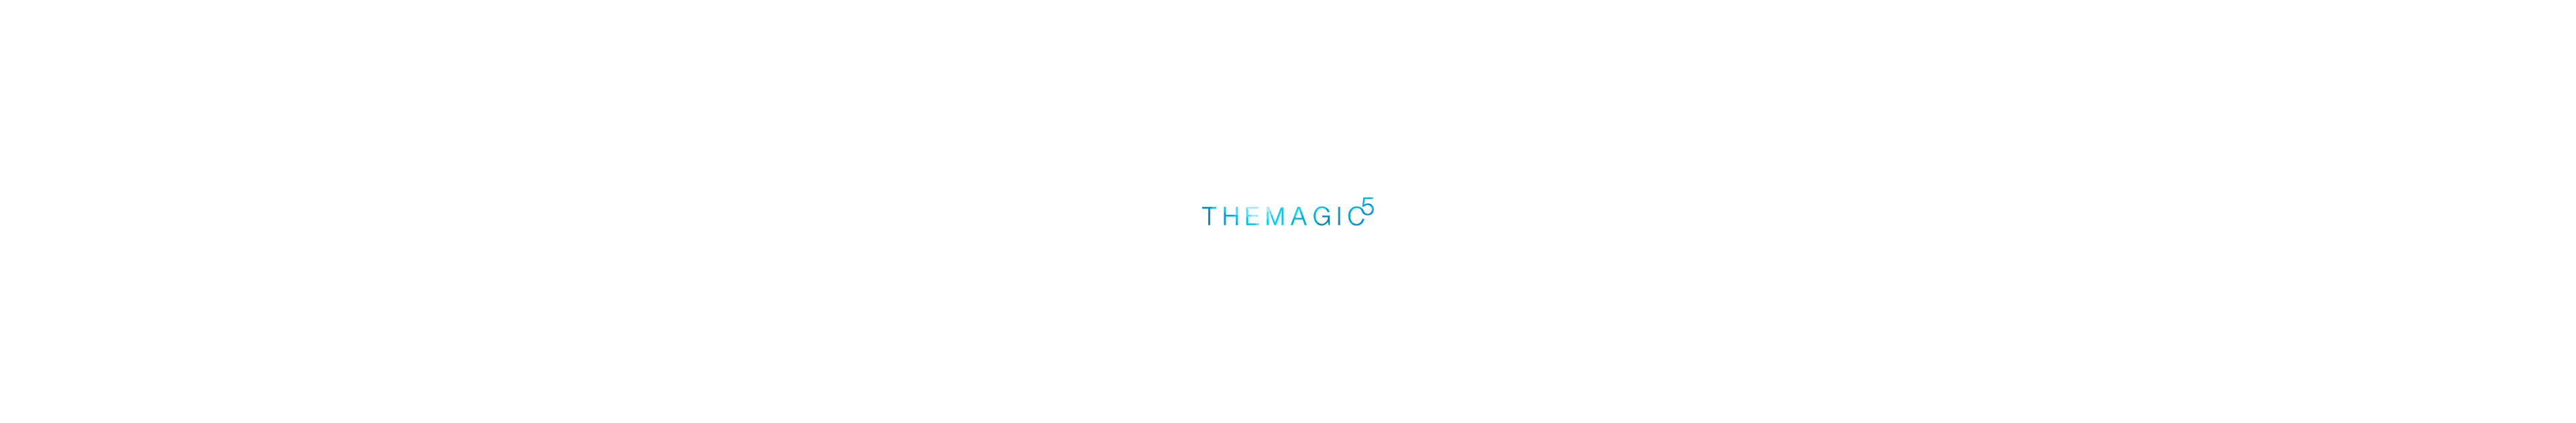 themagic5